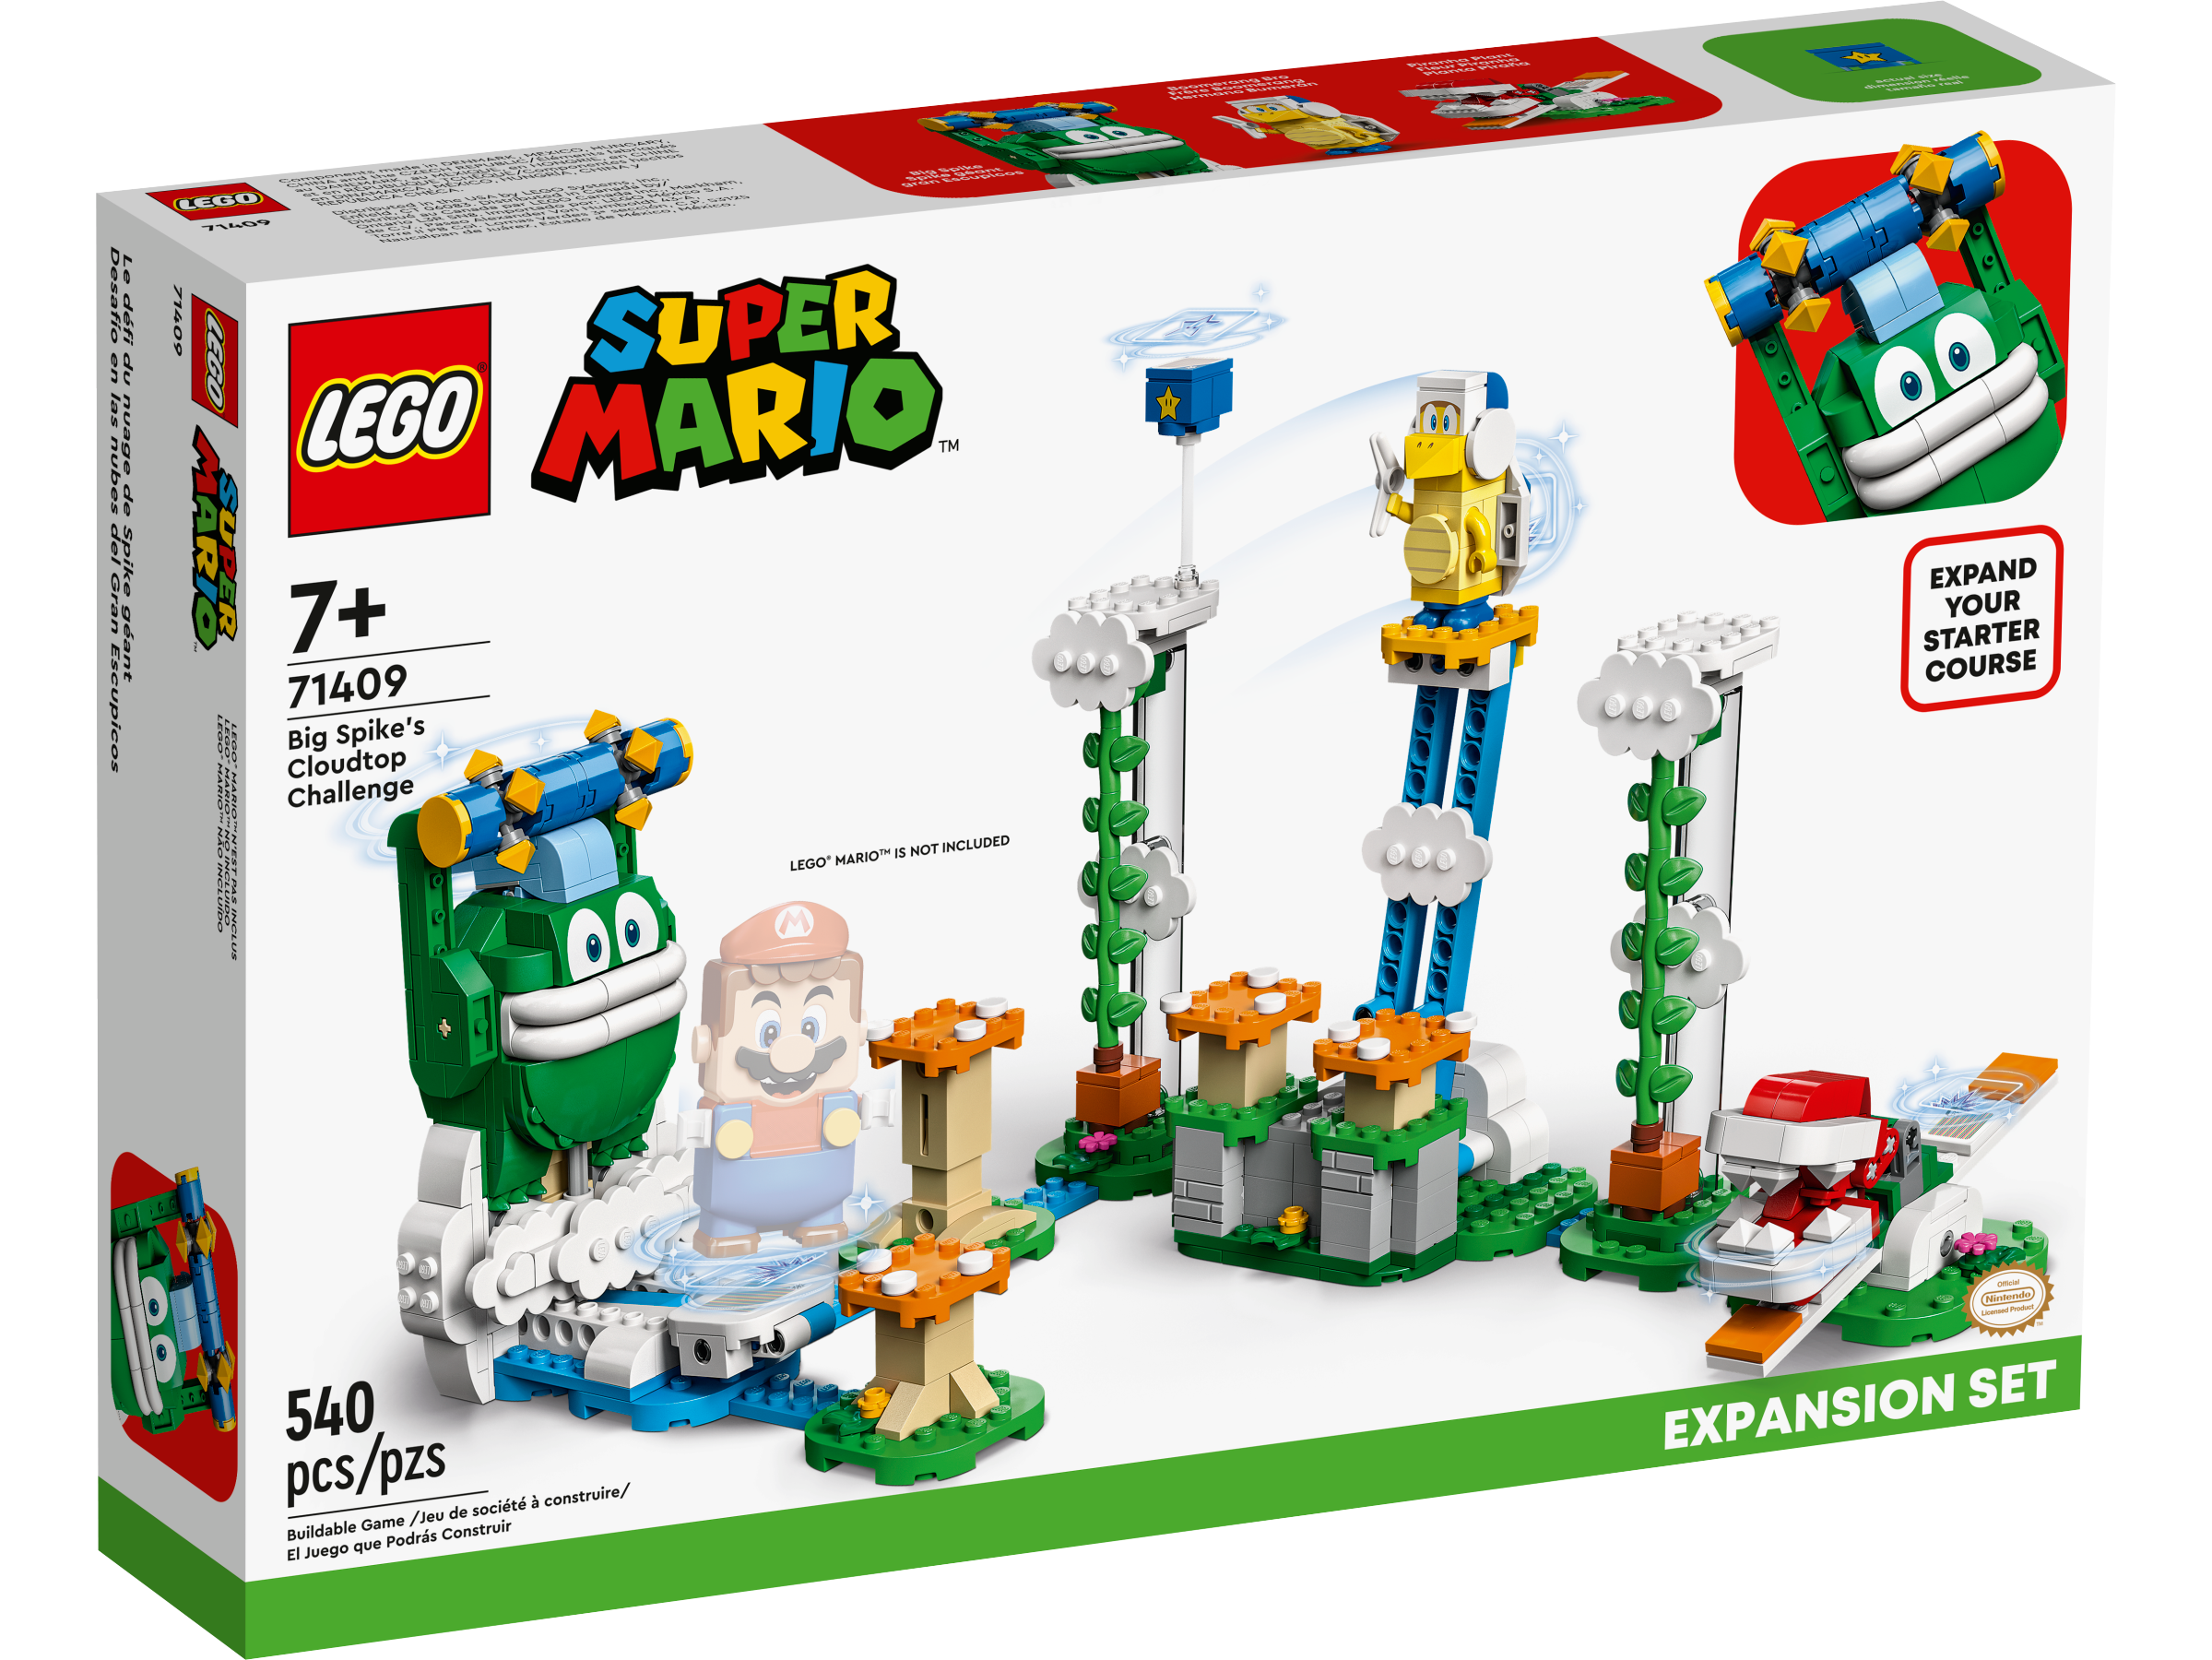 Big Spike's Cloudtop Challenge Expansion Set 71409, LEGO® Super Mario™